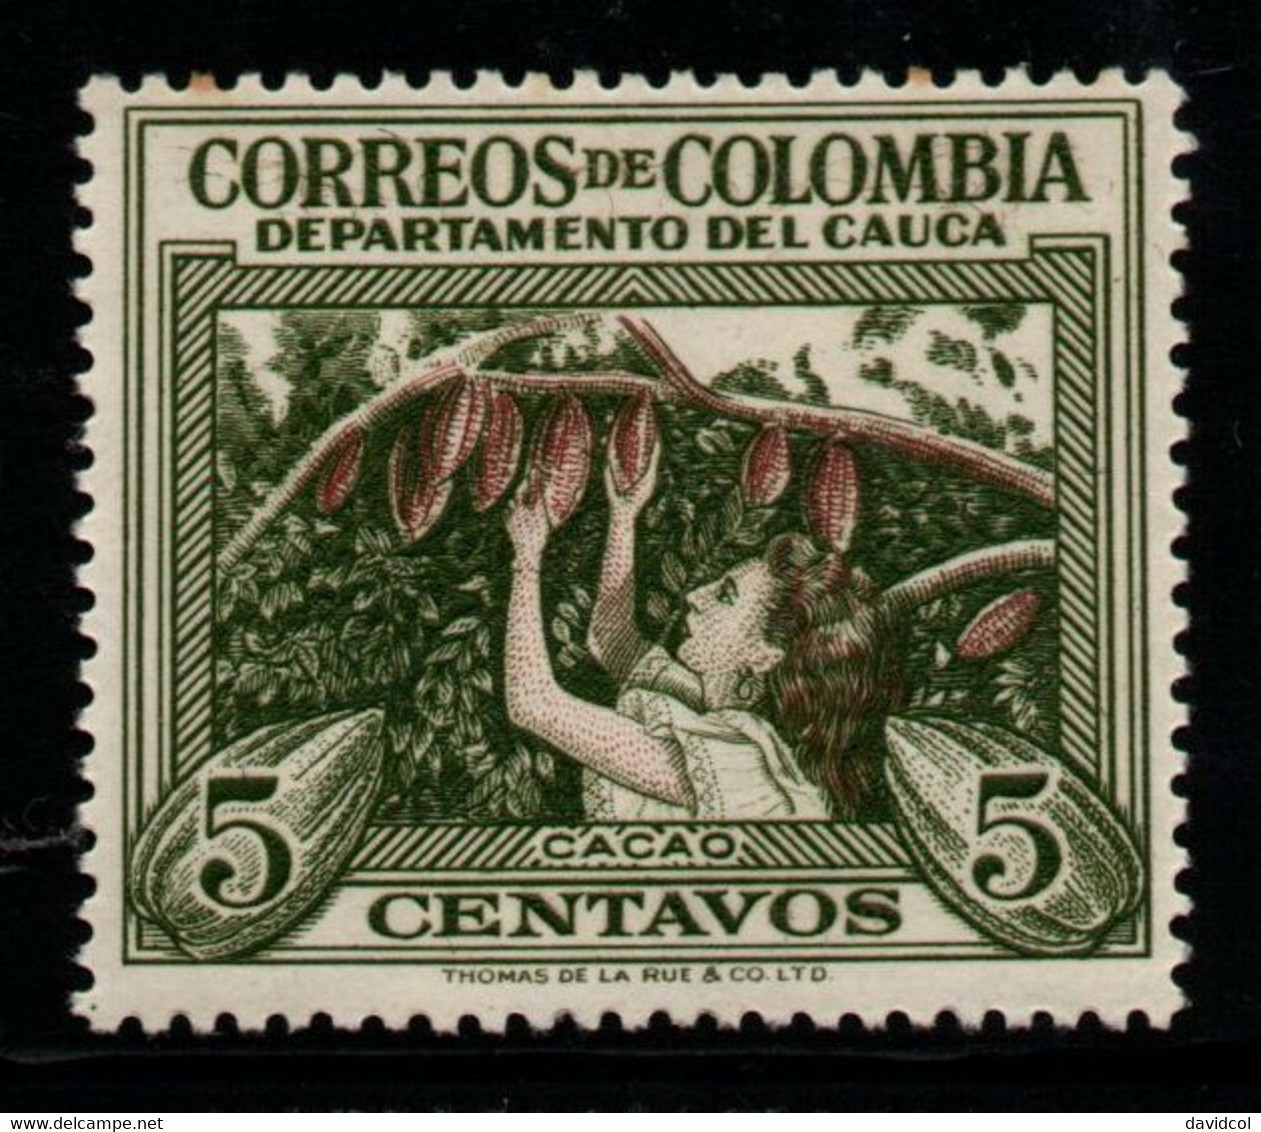 01J- KOLUMBIEN - 1956 - MI#: 773 - MNH - CAUCA / COCOA CROPS - COLOMBIAN DEPARTMENTS - Colombie